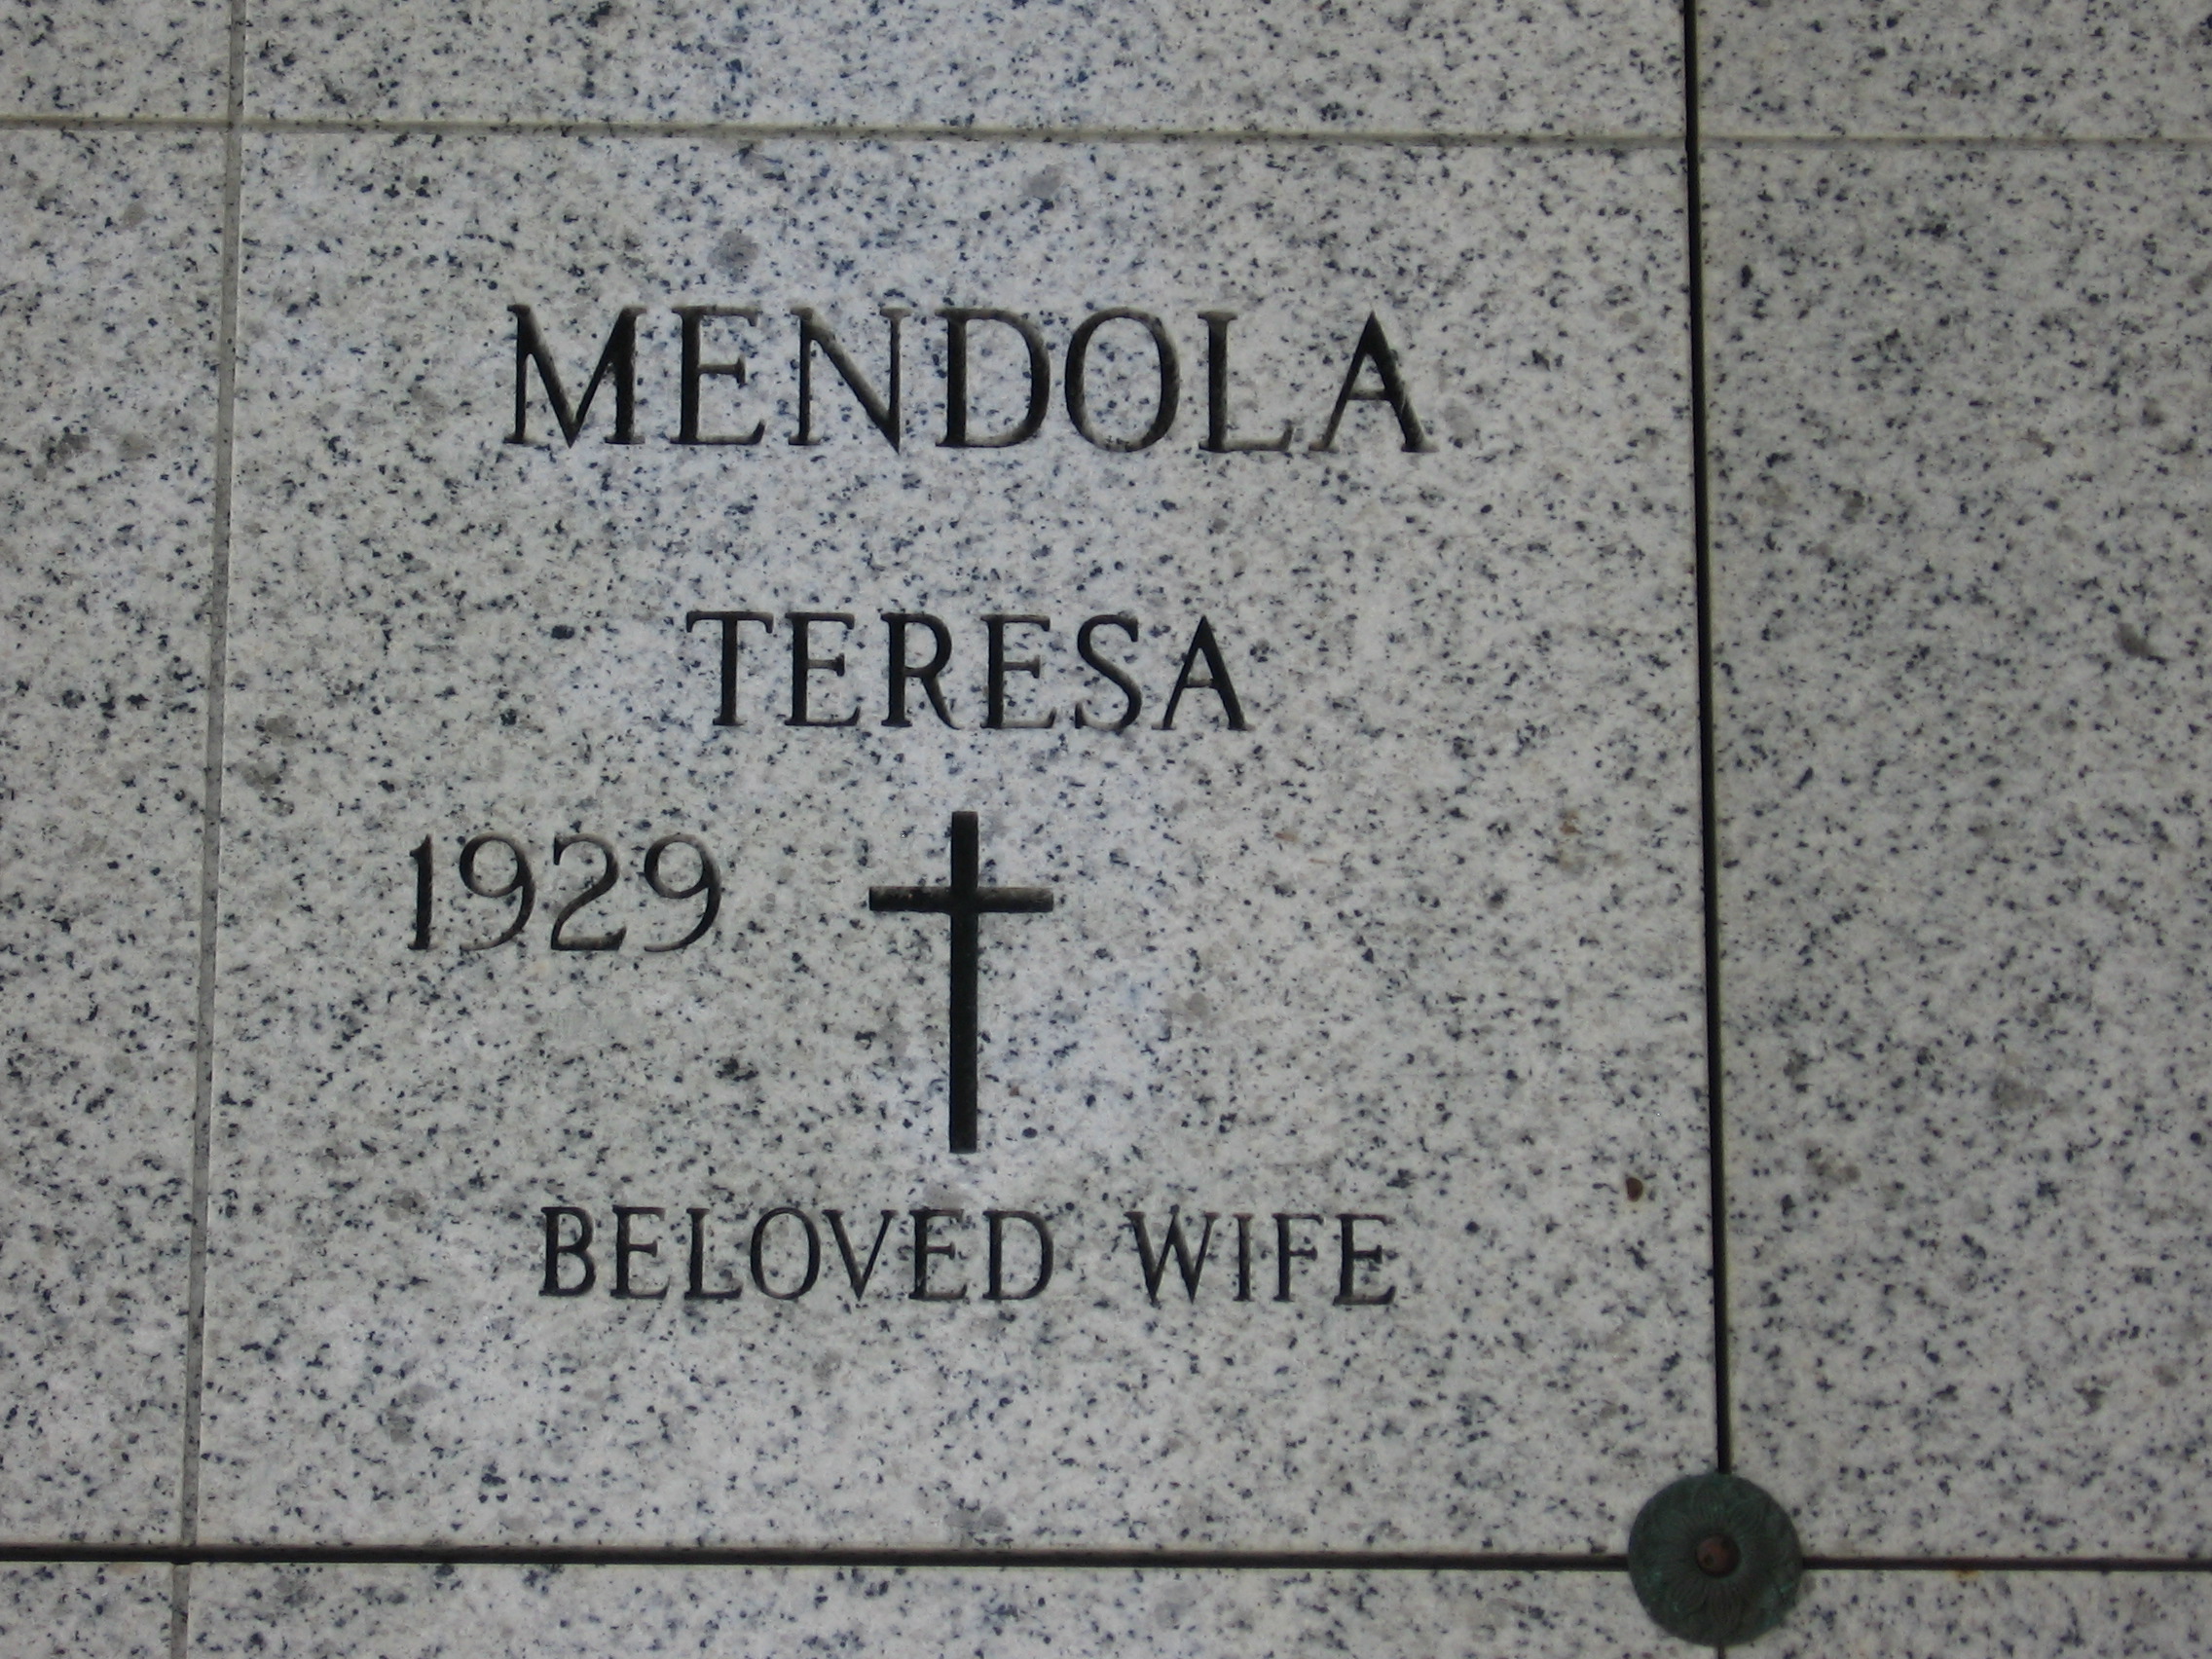 Teresa Mendola